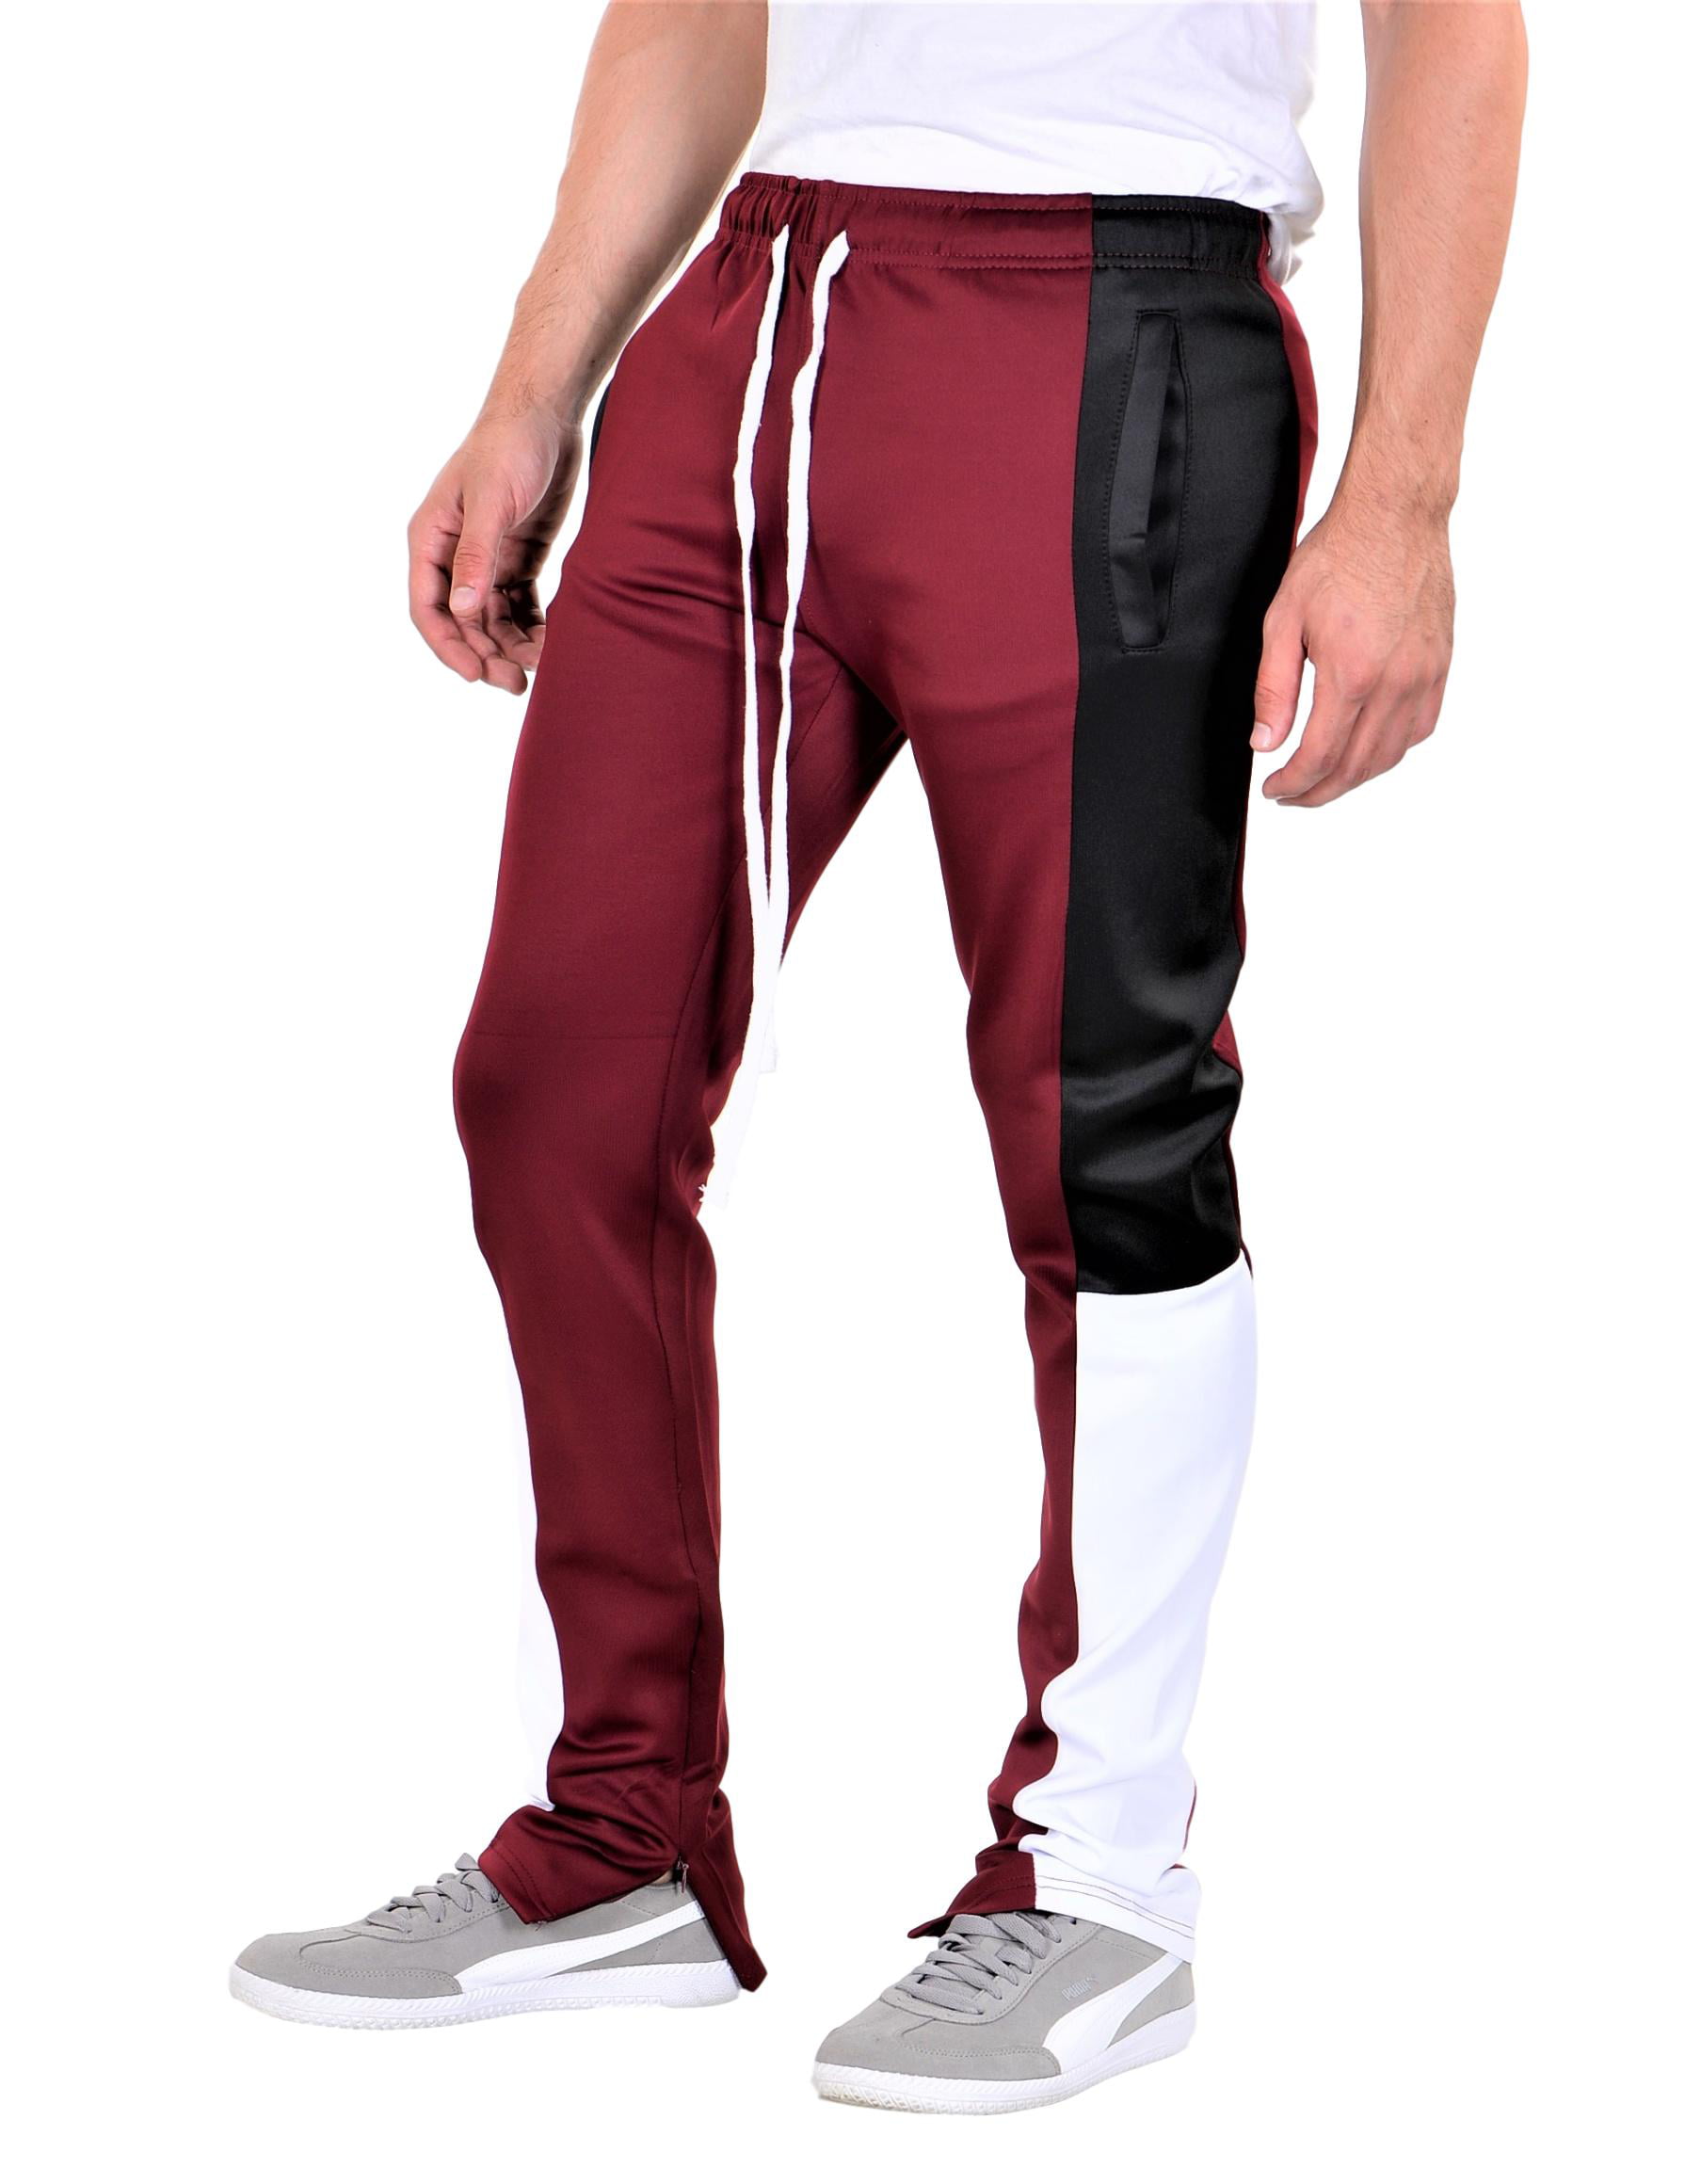 BKYS Men's Color Block Track Pants XL Burgundy - Walmart.com